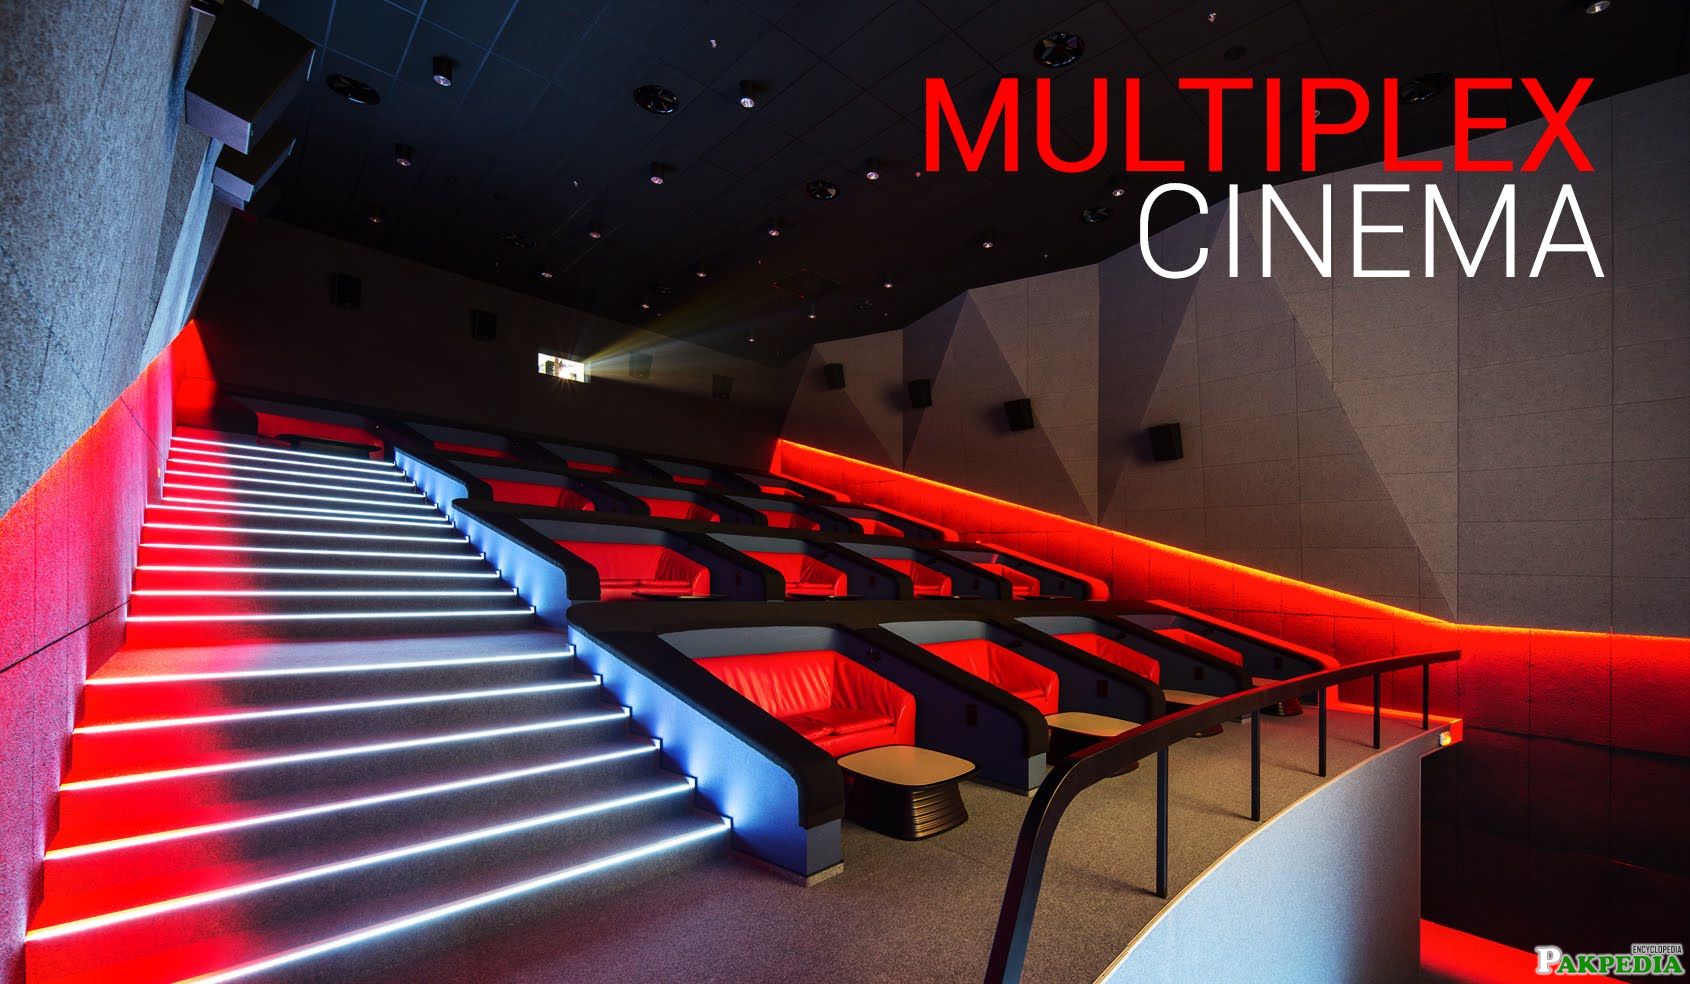 Multiplex Cinema Karachi